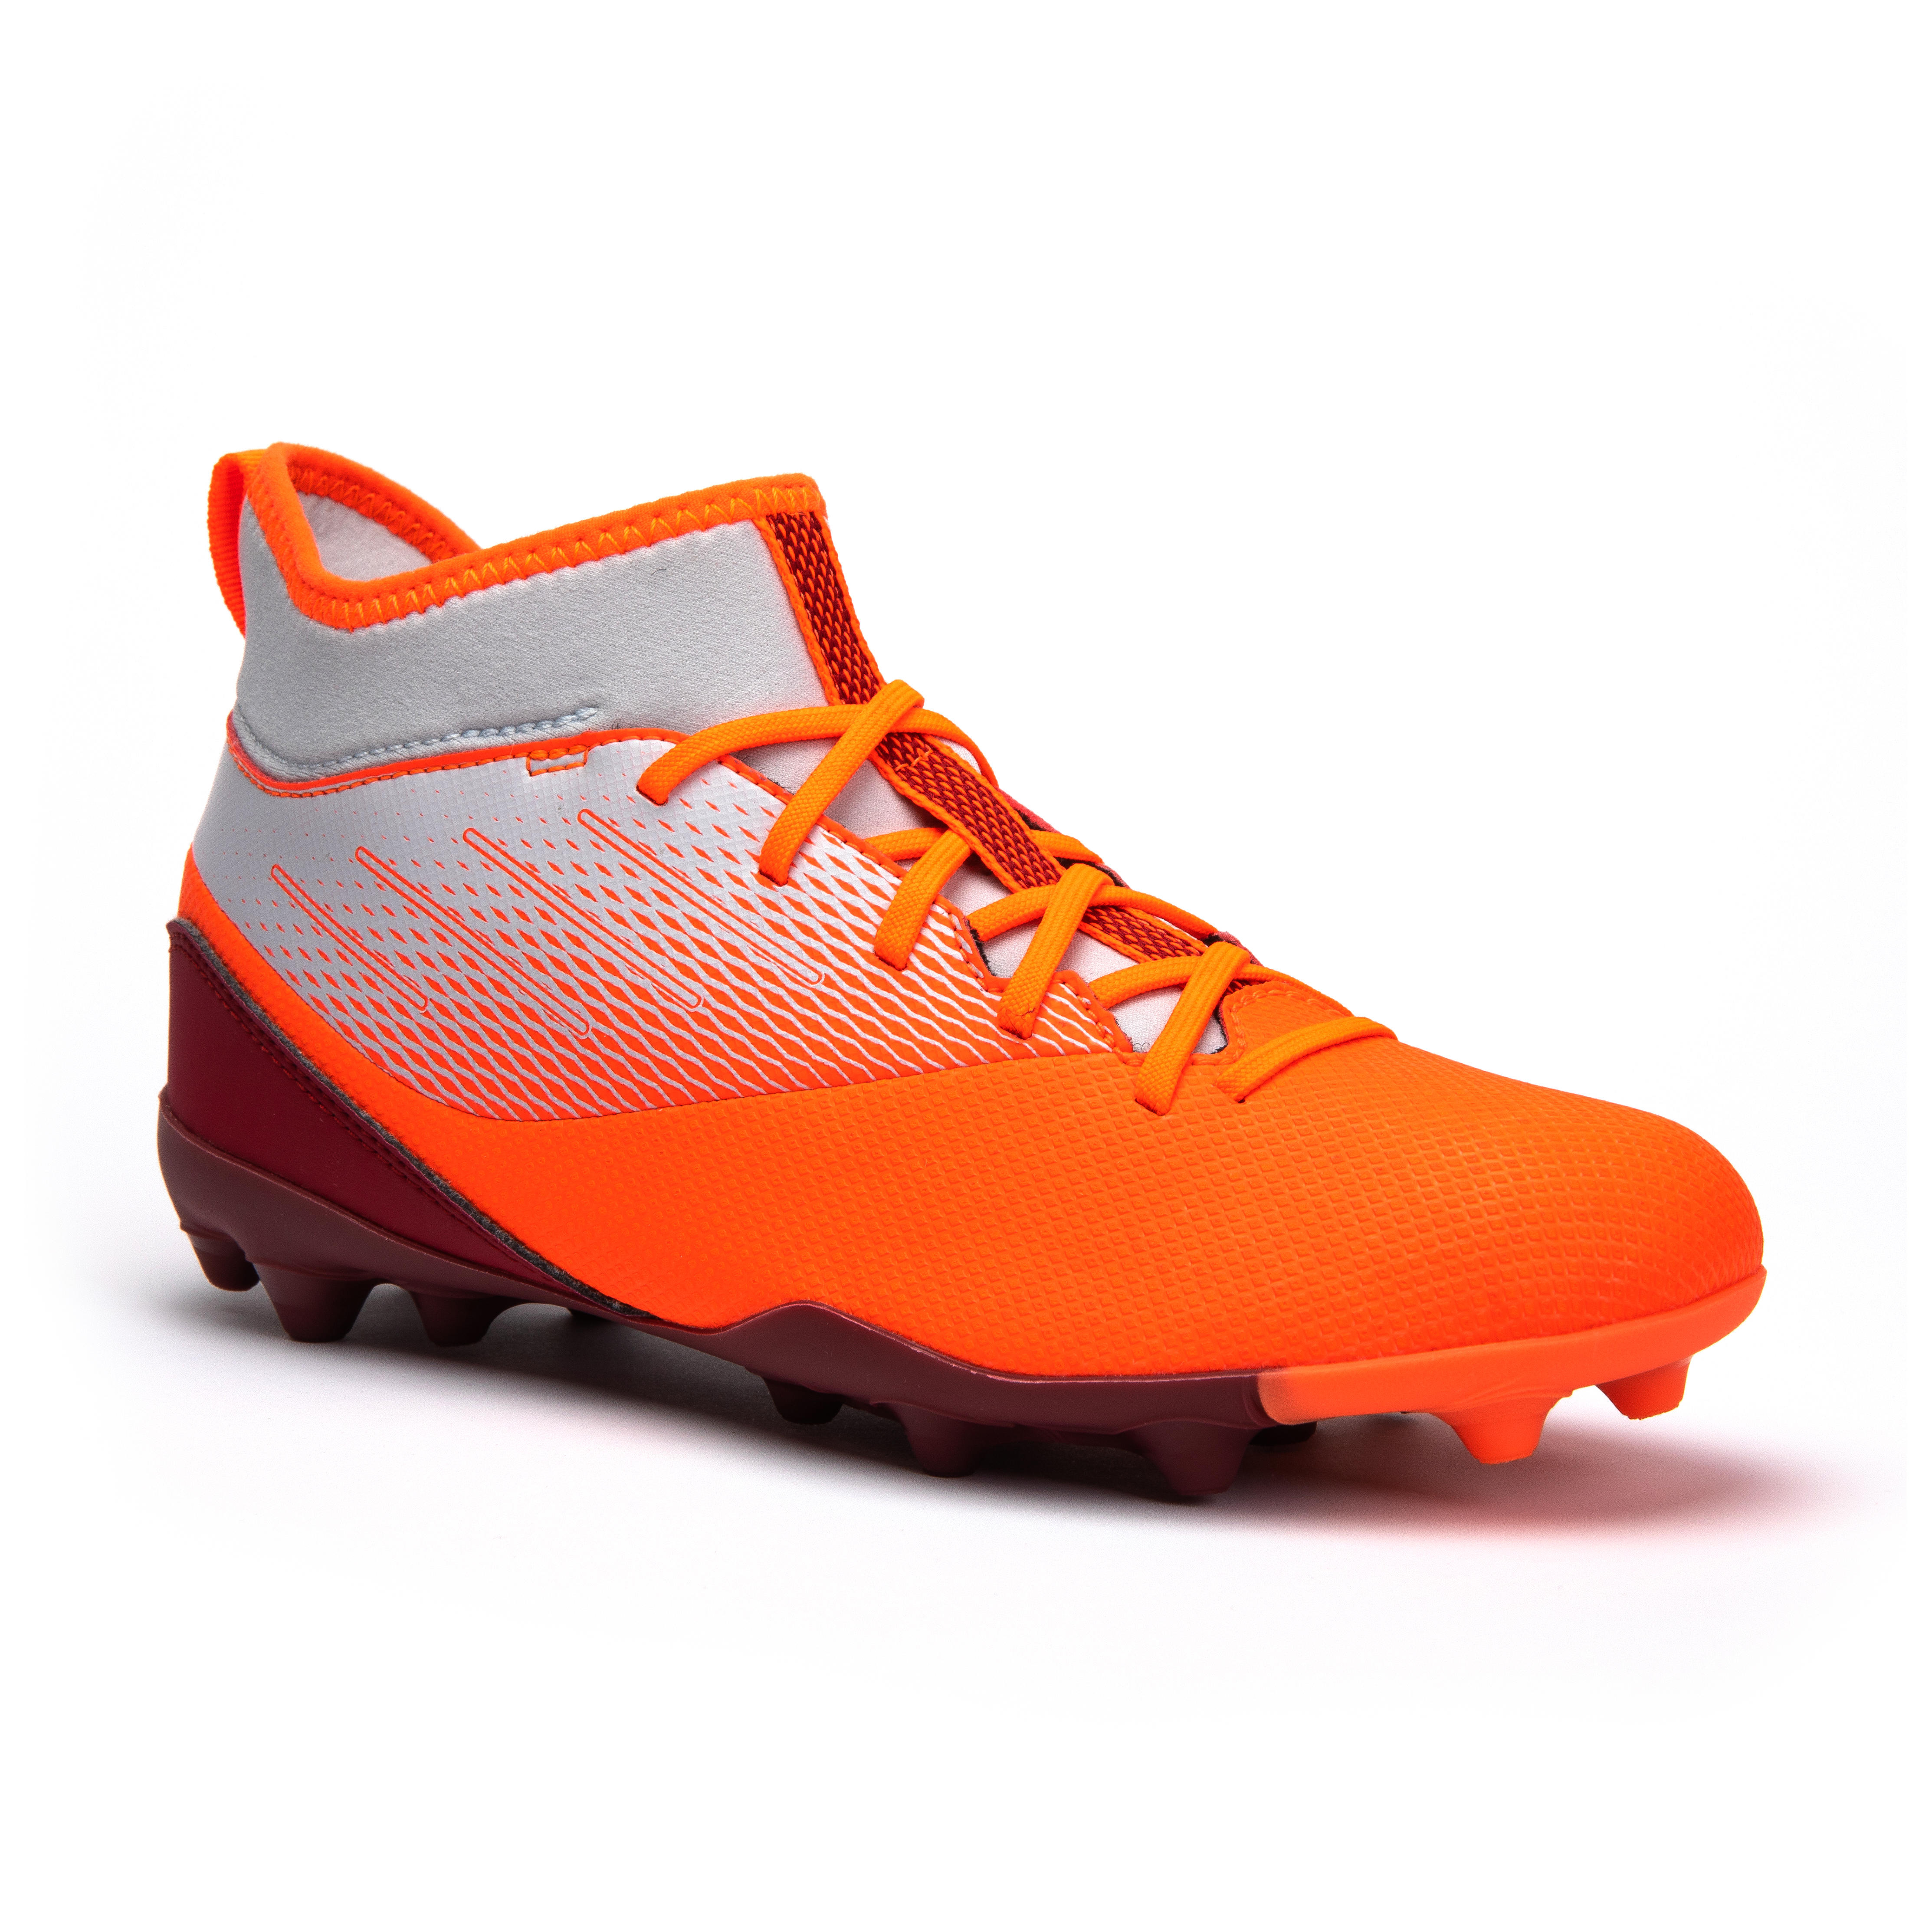 grey and orange nike football boots